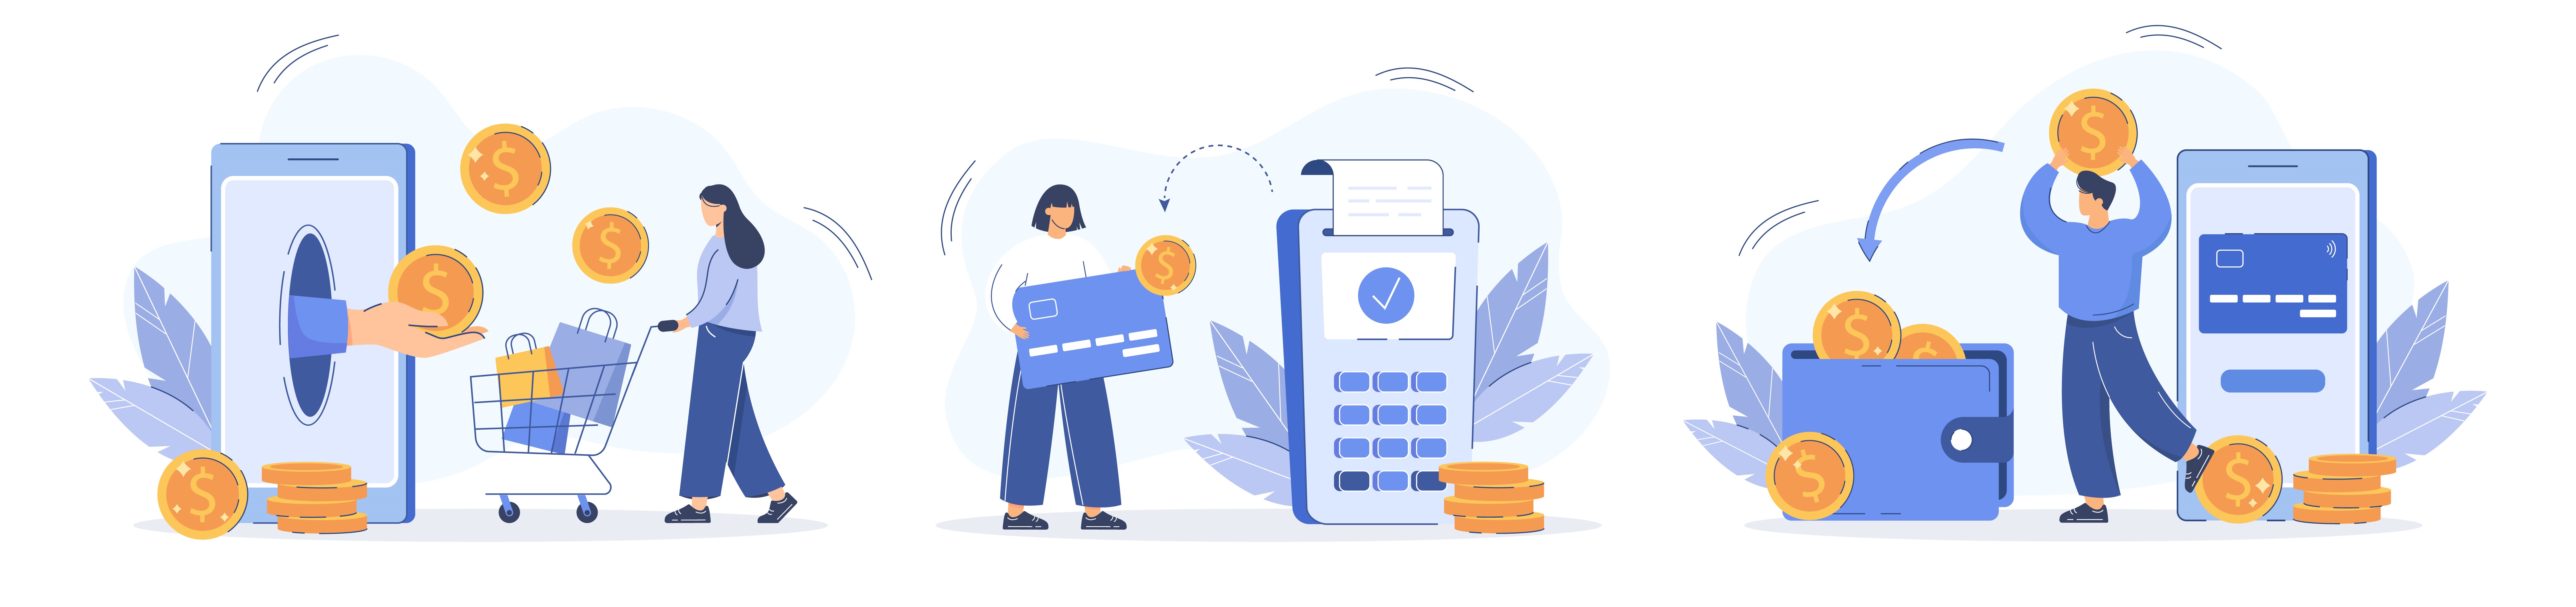 Flat illustration: Online payment, cashback, savings, loyalty rewards program